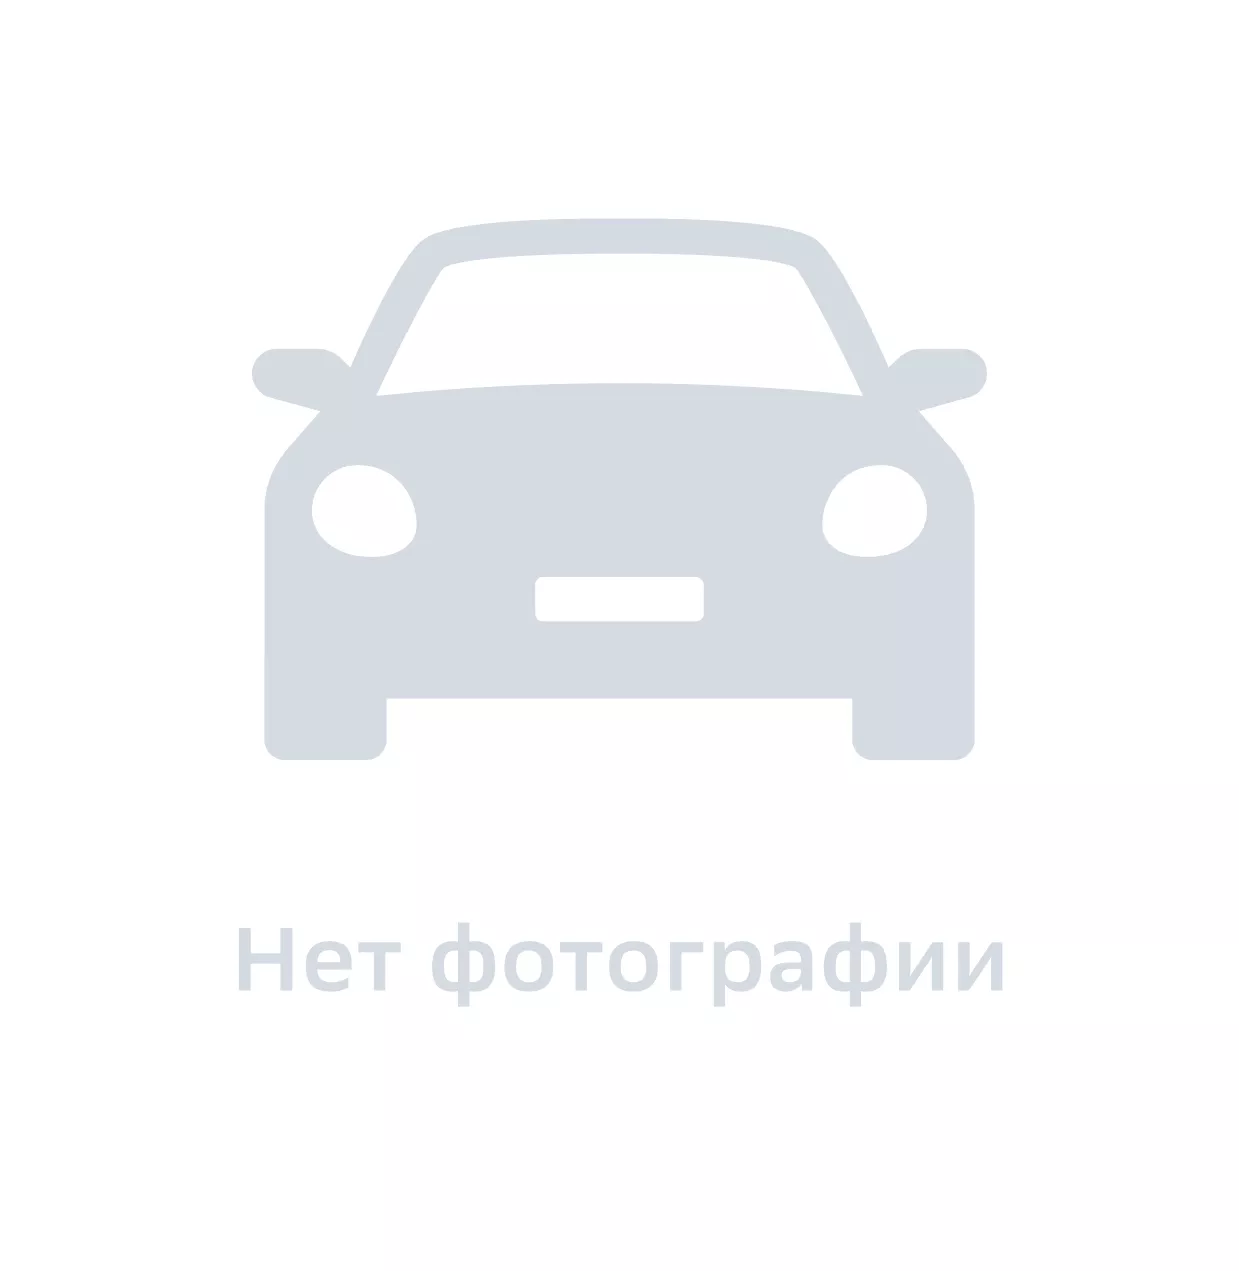 Хомут автомобильный, Hyundai-KIA, арт. 1472013806B, цена за 1 шт.